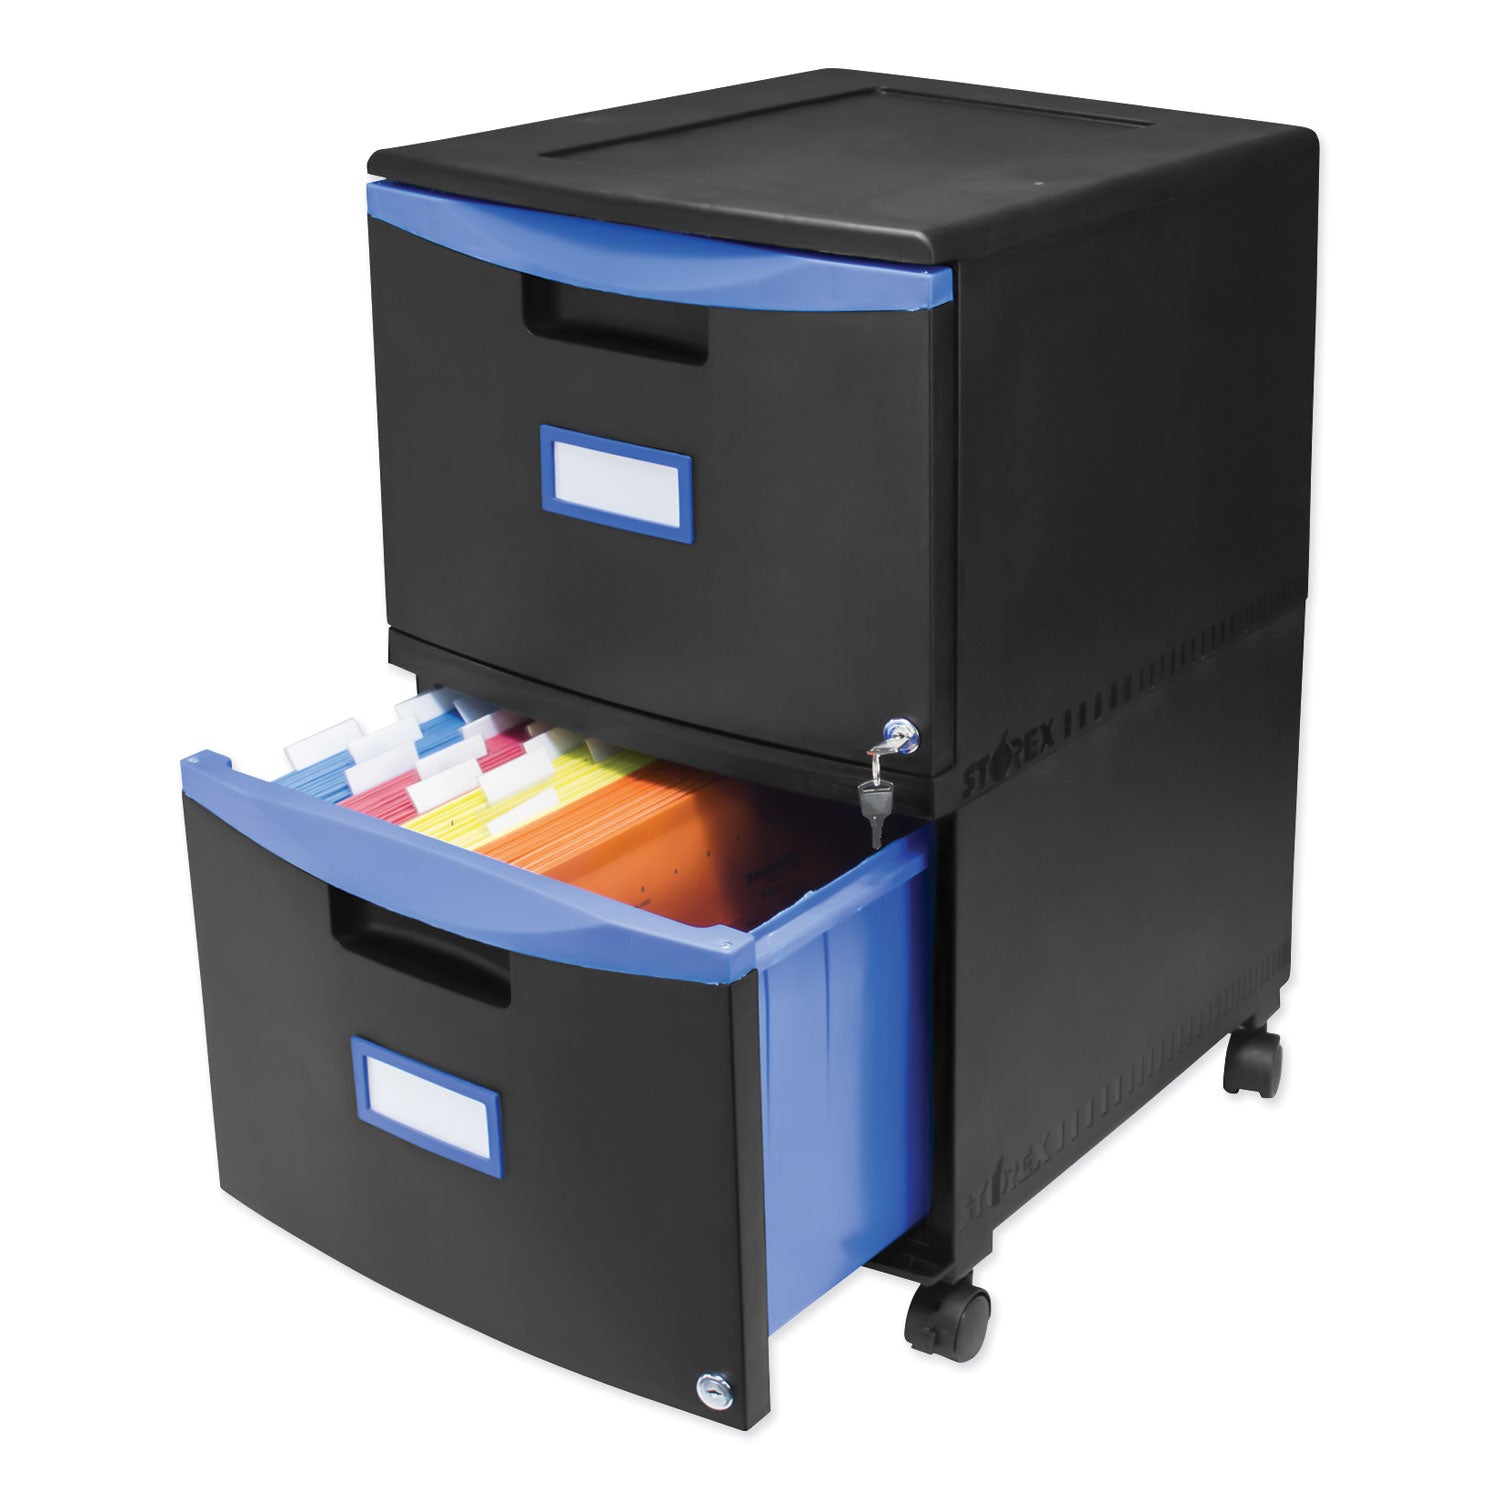 two-drawer-mobile-filing-cabinet-2-legal-letter-size-file-drawers-black-blue-1475-x-1825-x-26_stx61314u01c - 4